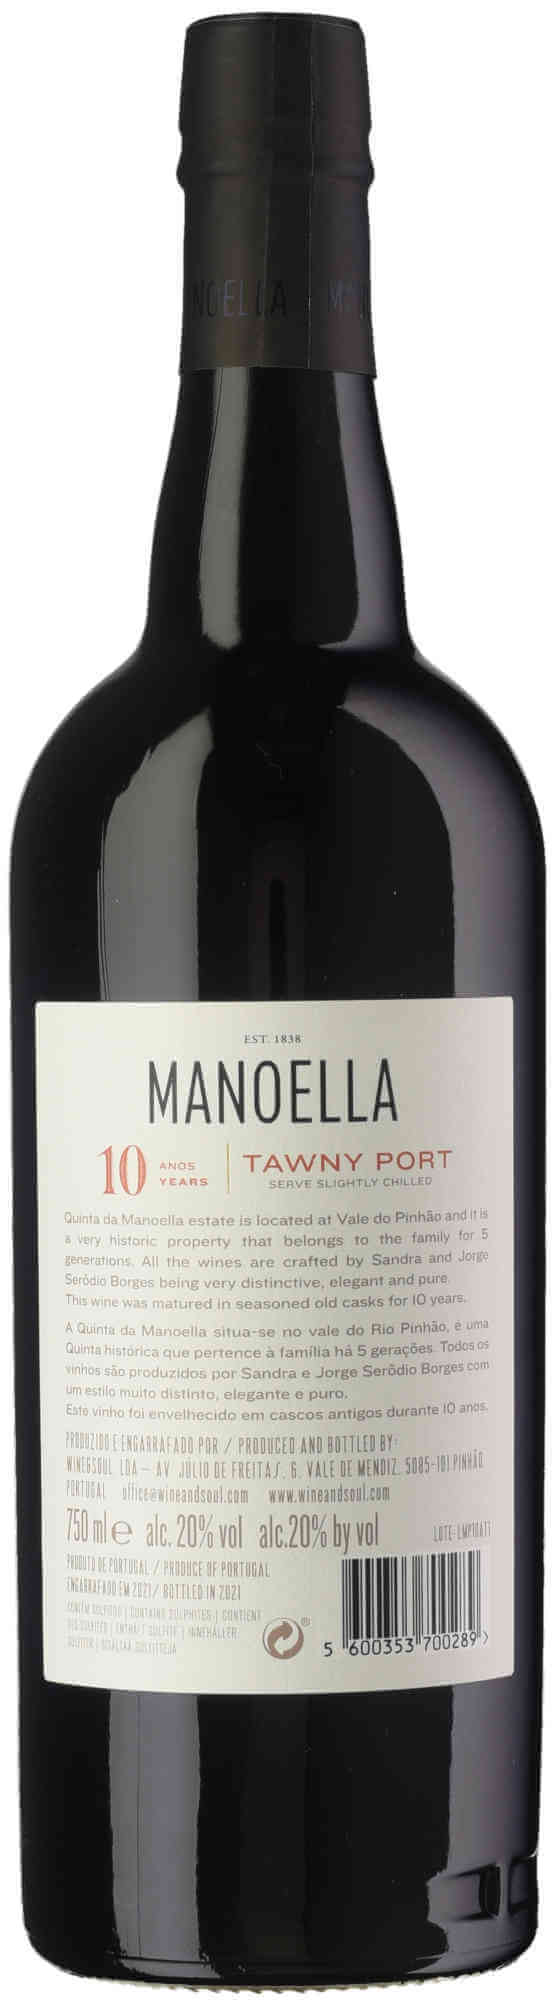 Manoella-10-Years-Tawny-Port-back